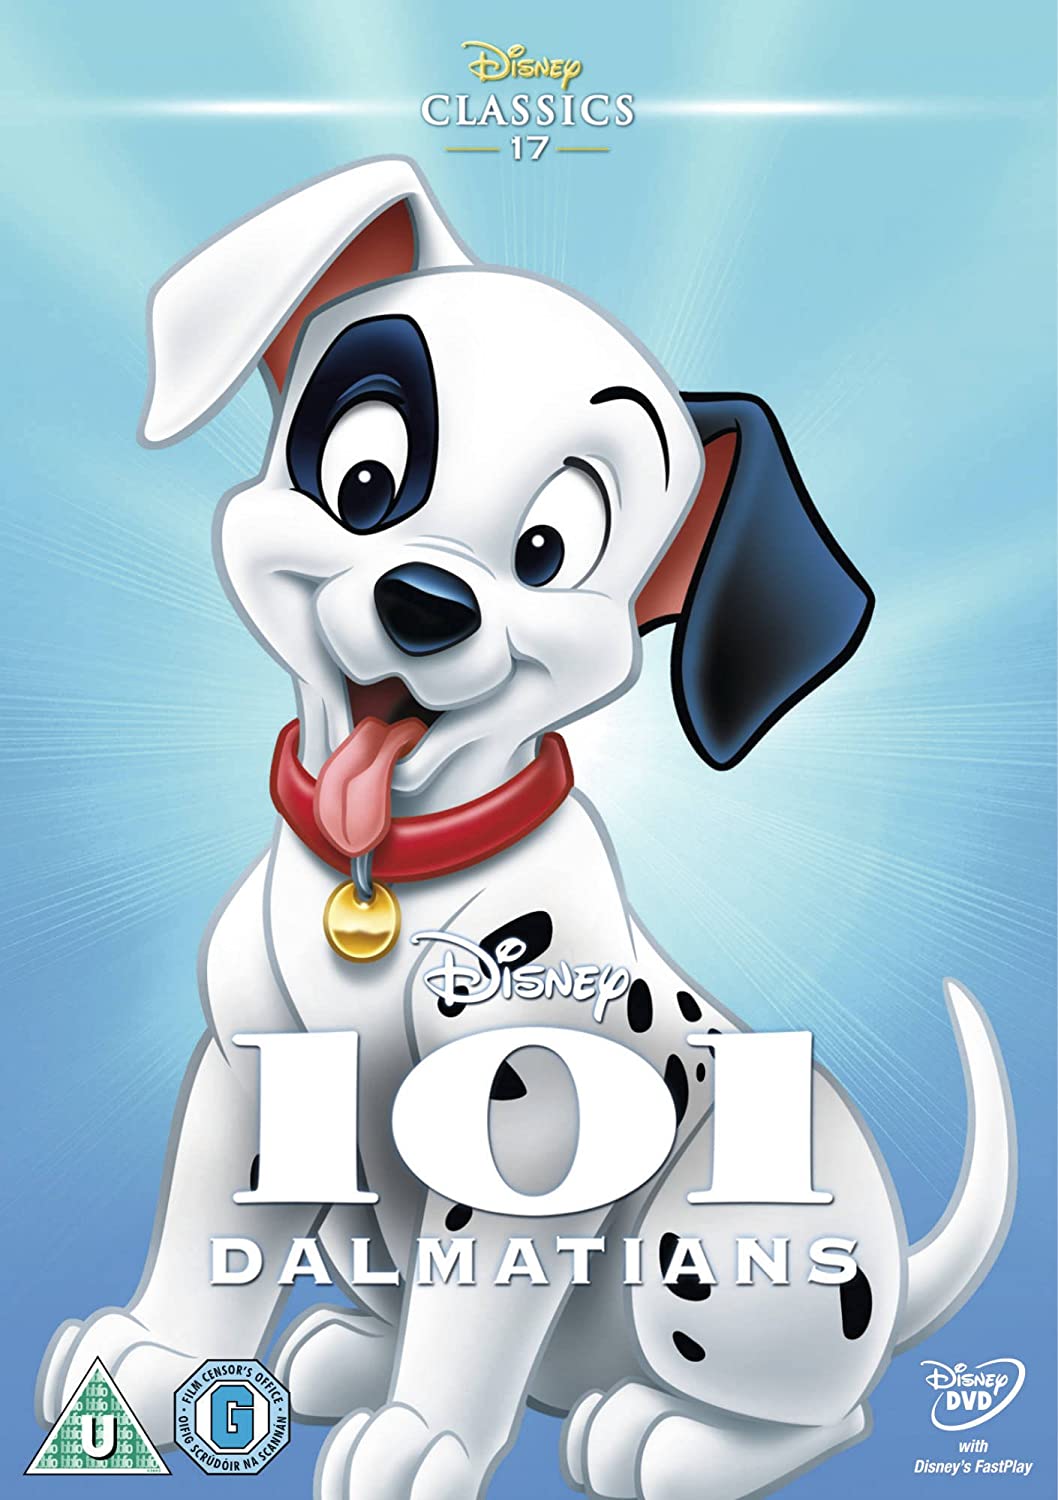 101 Dalmatians (1961) (Limited Edition Artwork Sleeve) [DVD]